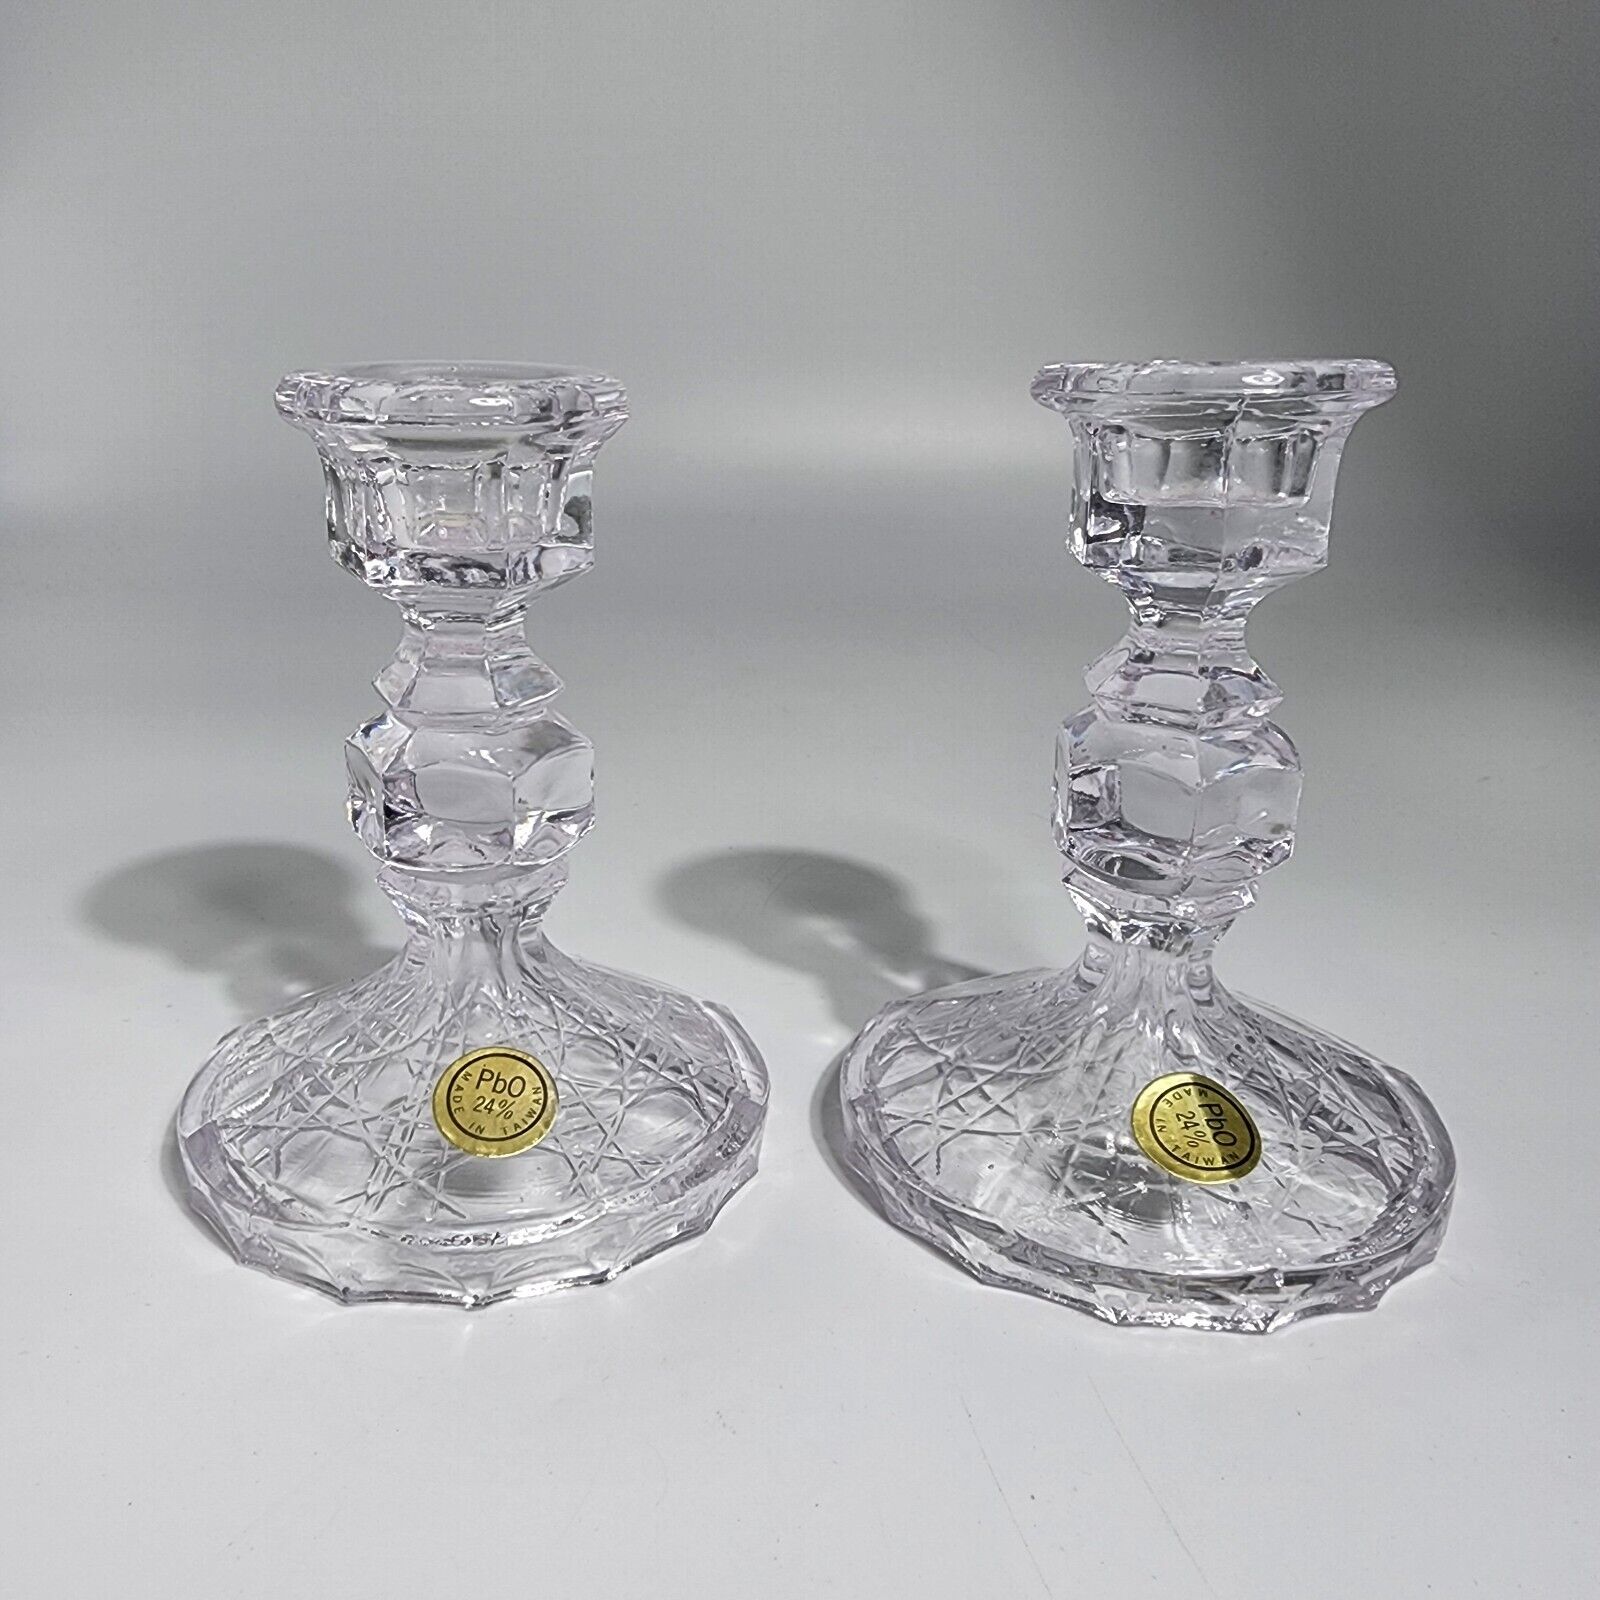 Crystal Pedestal Candlesticks Candleholders Pair PbO 24% Vintage Made in Taiwan